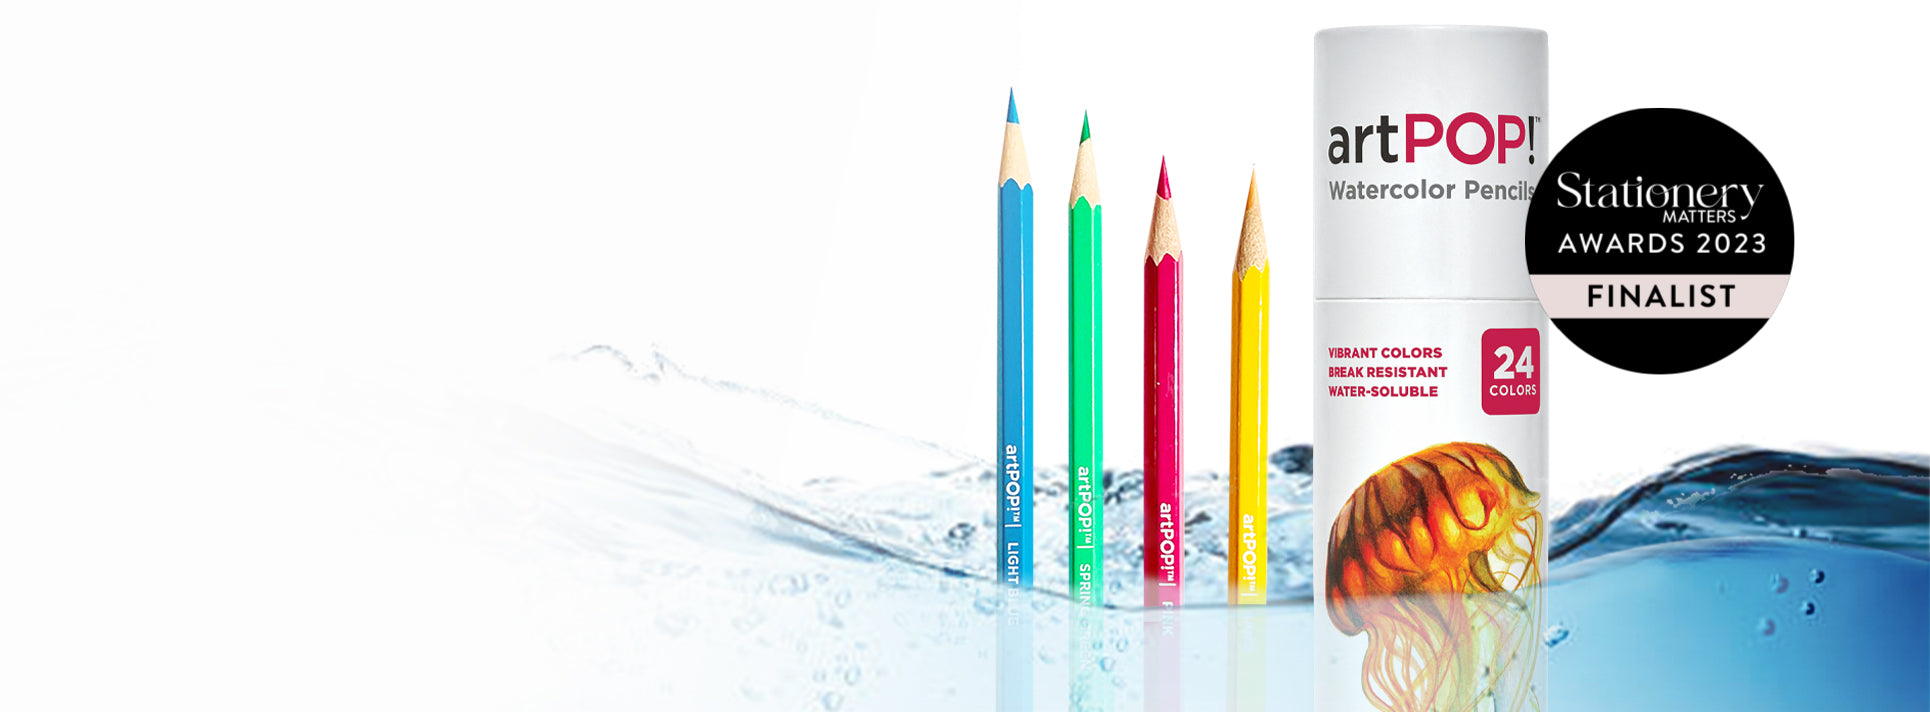 artPOP! Watercolor Pencils. Stationery Matters Awards 2023 Finalist.